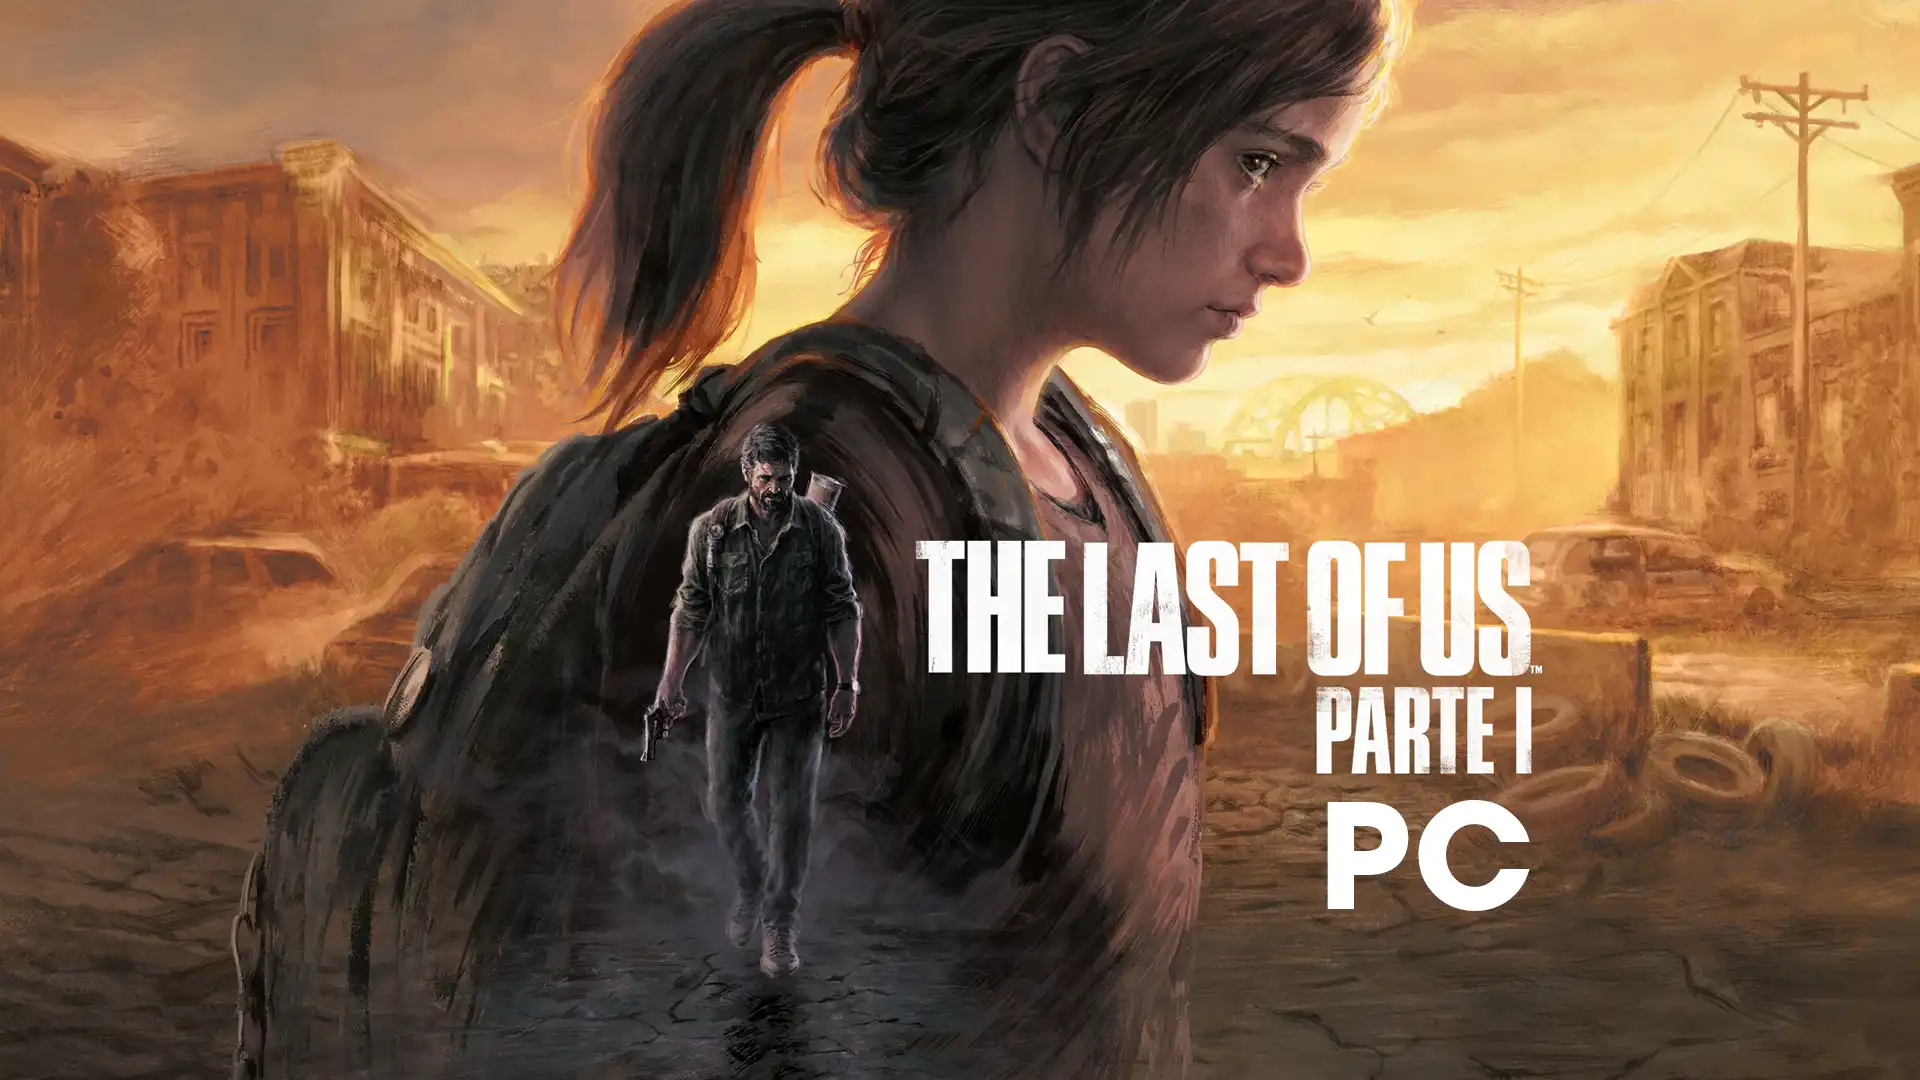 The Last Of Us PC - Tudo sobre o jogo